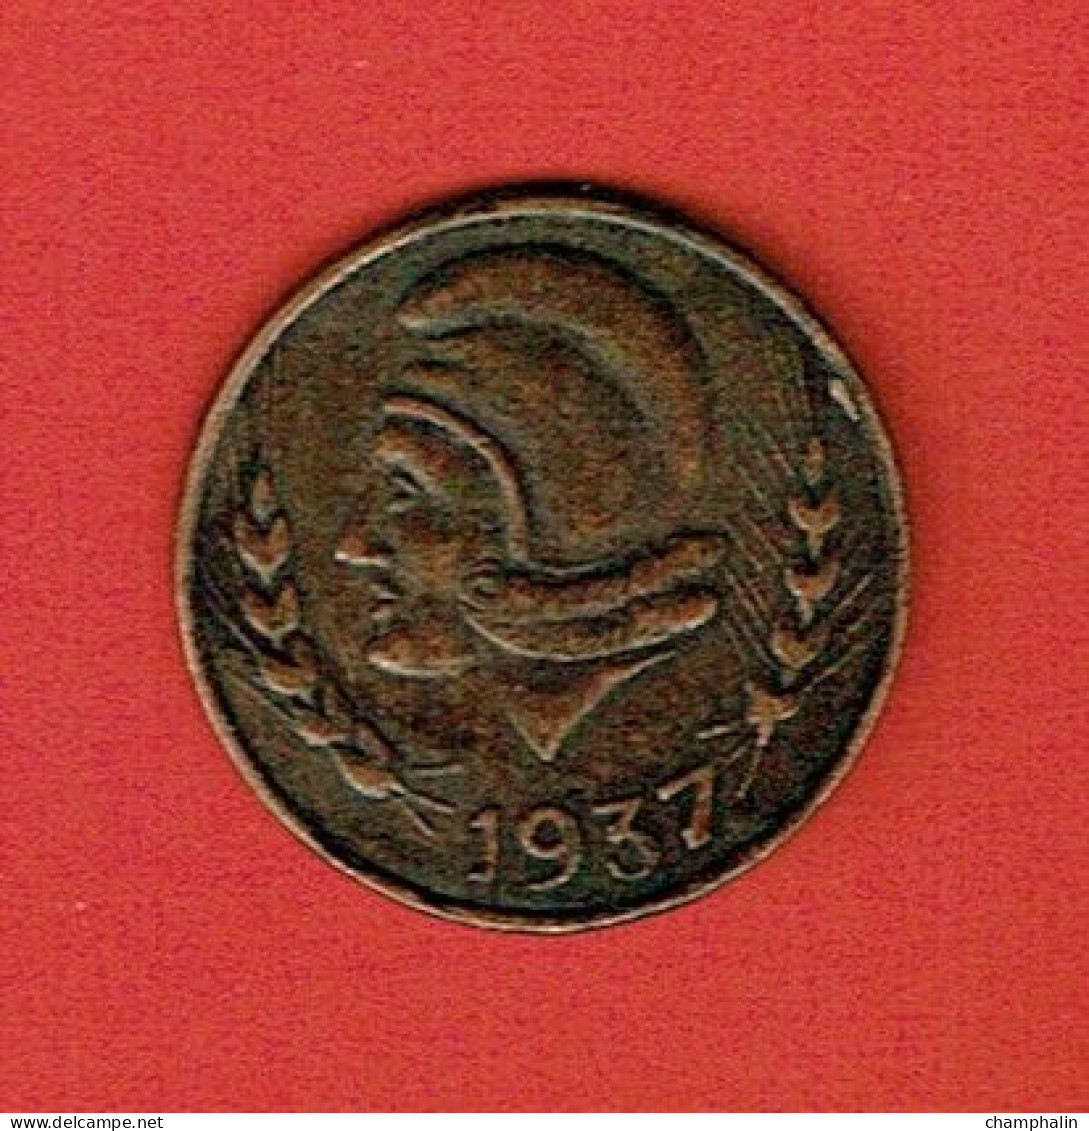 Espagne - Reproduction Monnaie - 25 Centimos 1937 - Consejo Municipal Ibi (Alicante) - Guerre Civile - Zona Repubblicana